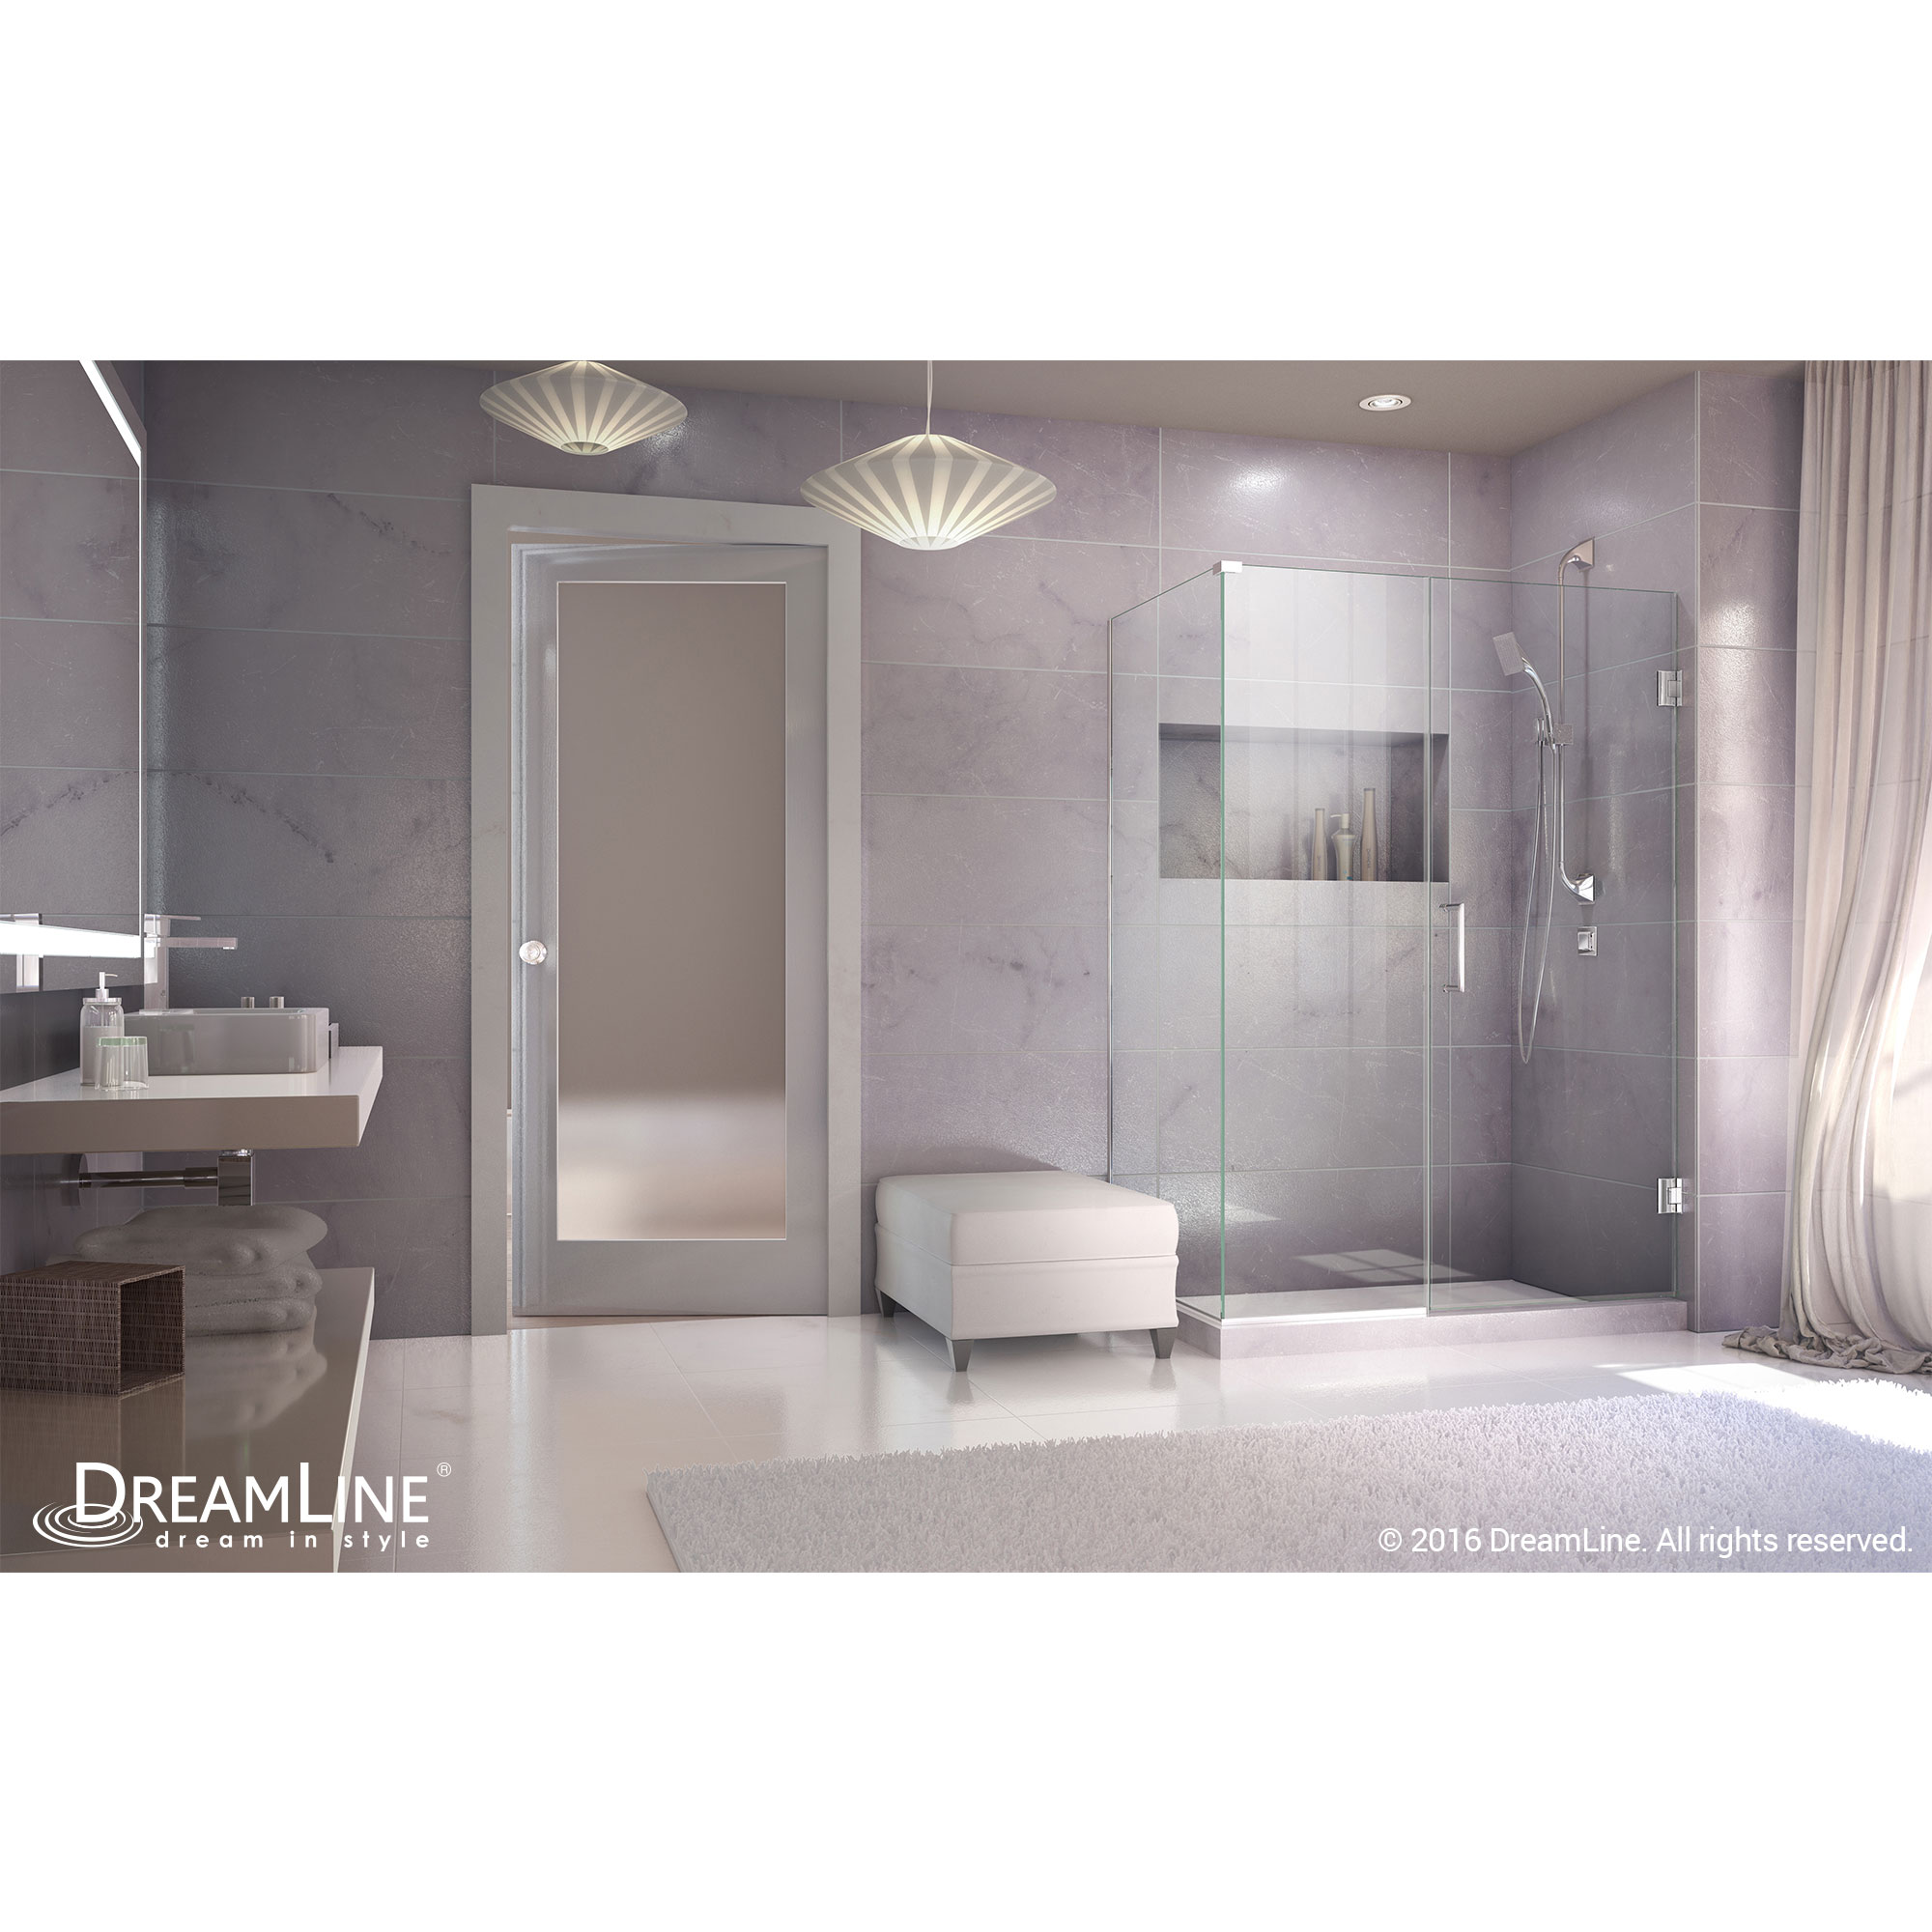 DreamLine SHEN-24320340-01 Unidoor Plus Hinged Shower Enclosure In Chrome Finish Hardware